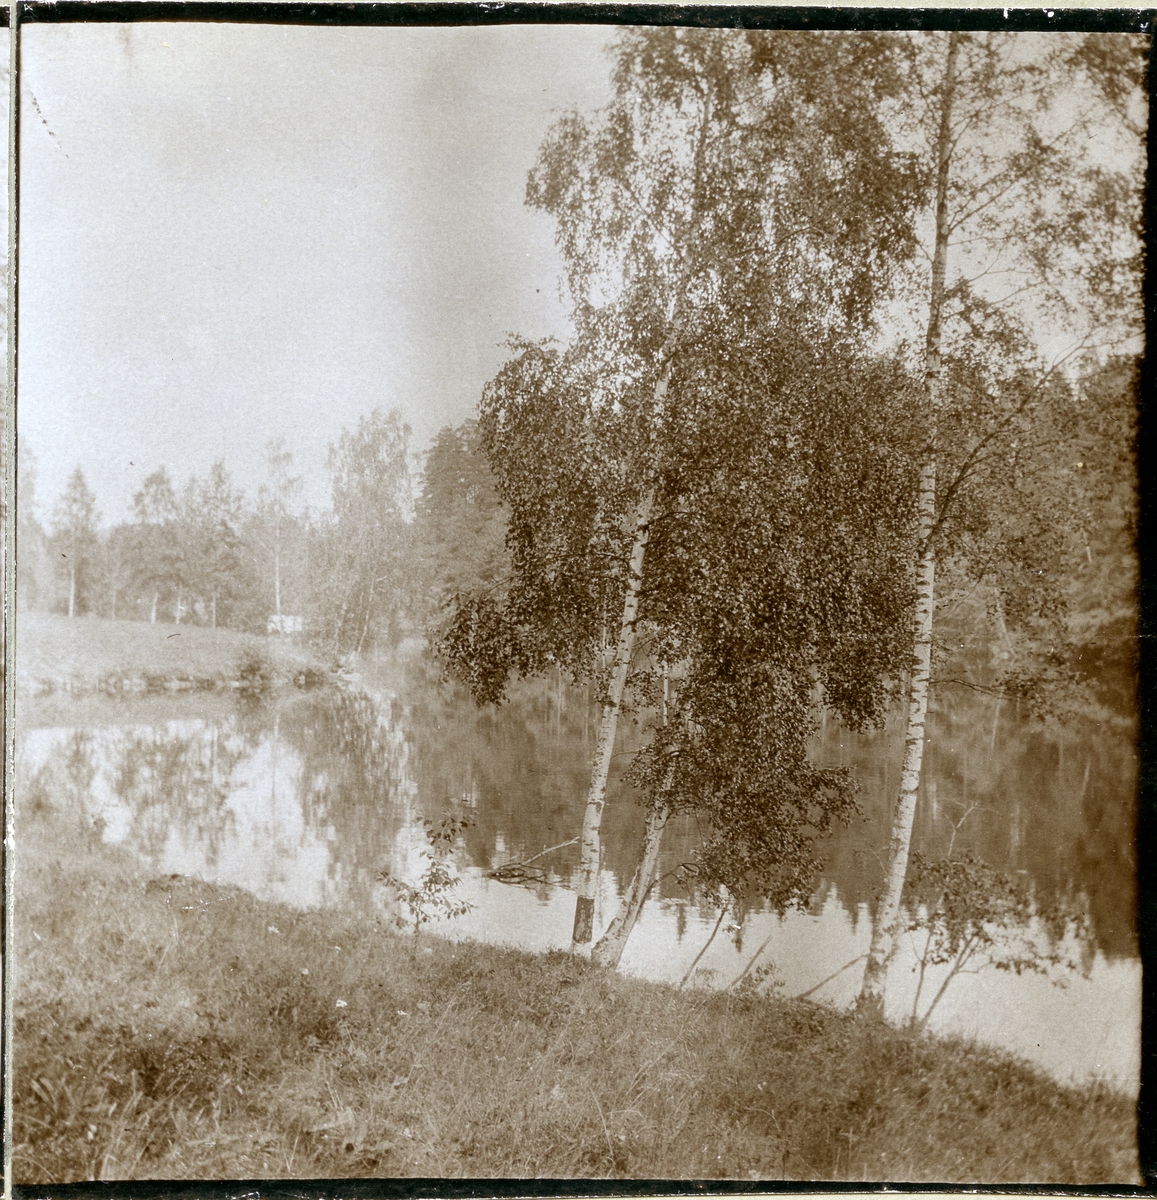 Västanfors sn, Fagersta kn, Västanfors.
Stereoskopiskt foto (3-D), c:a 1909.